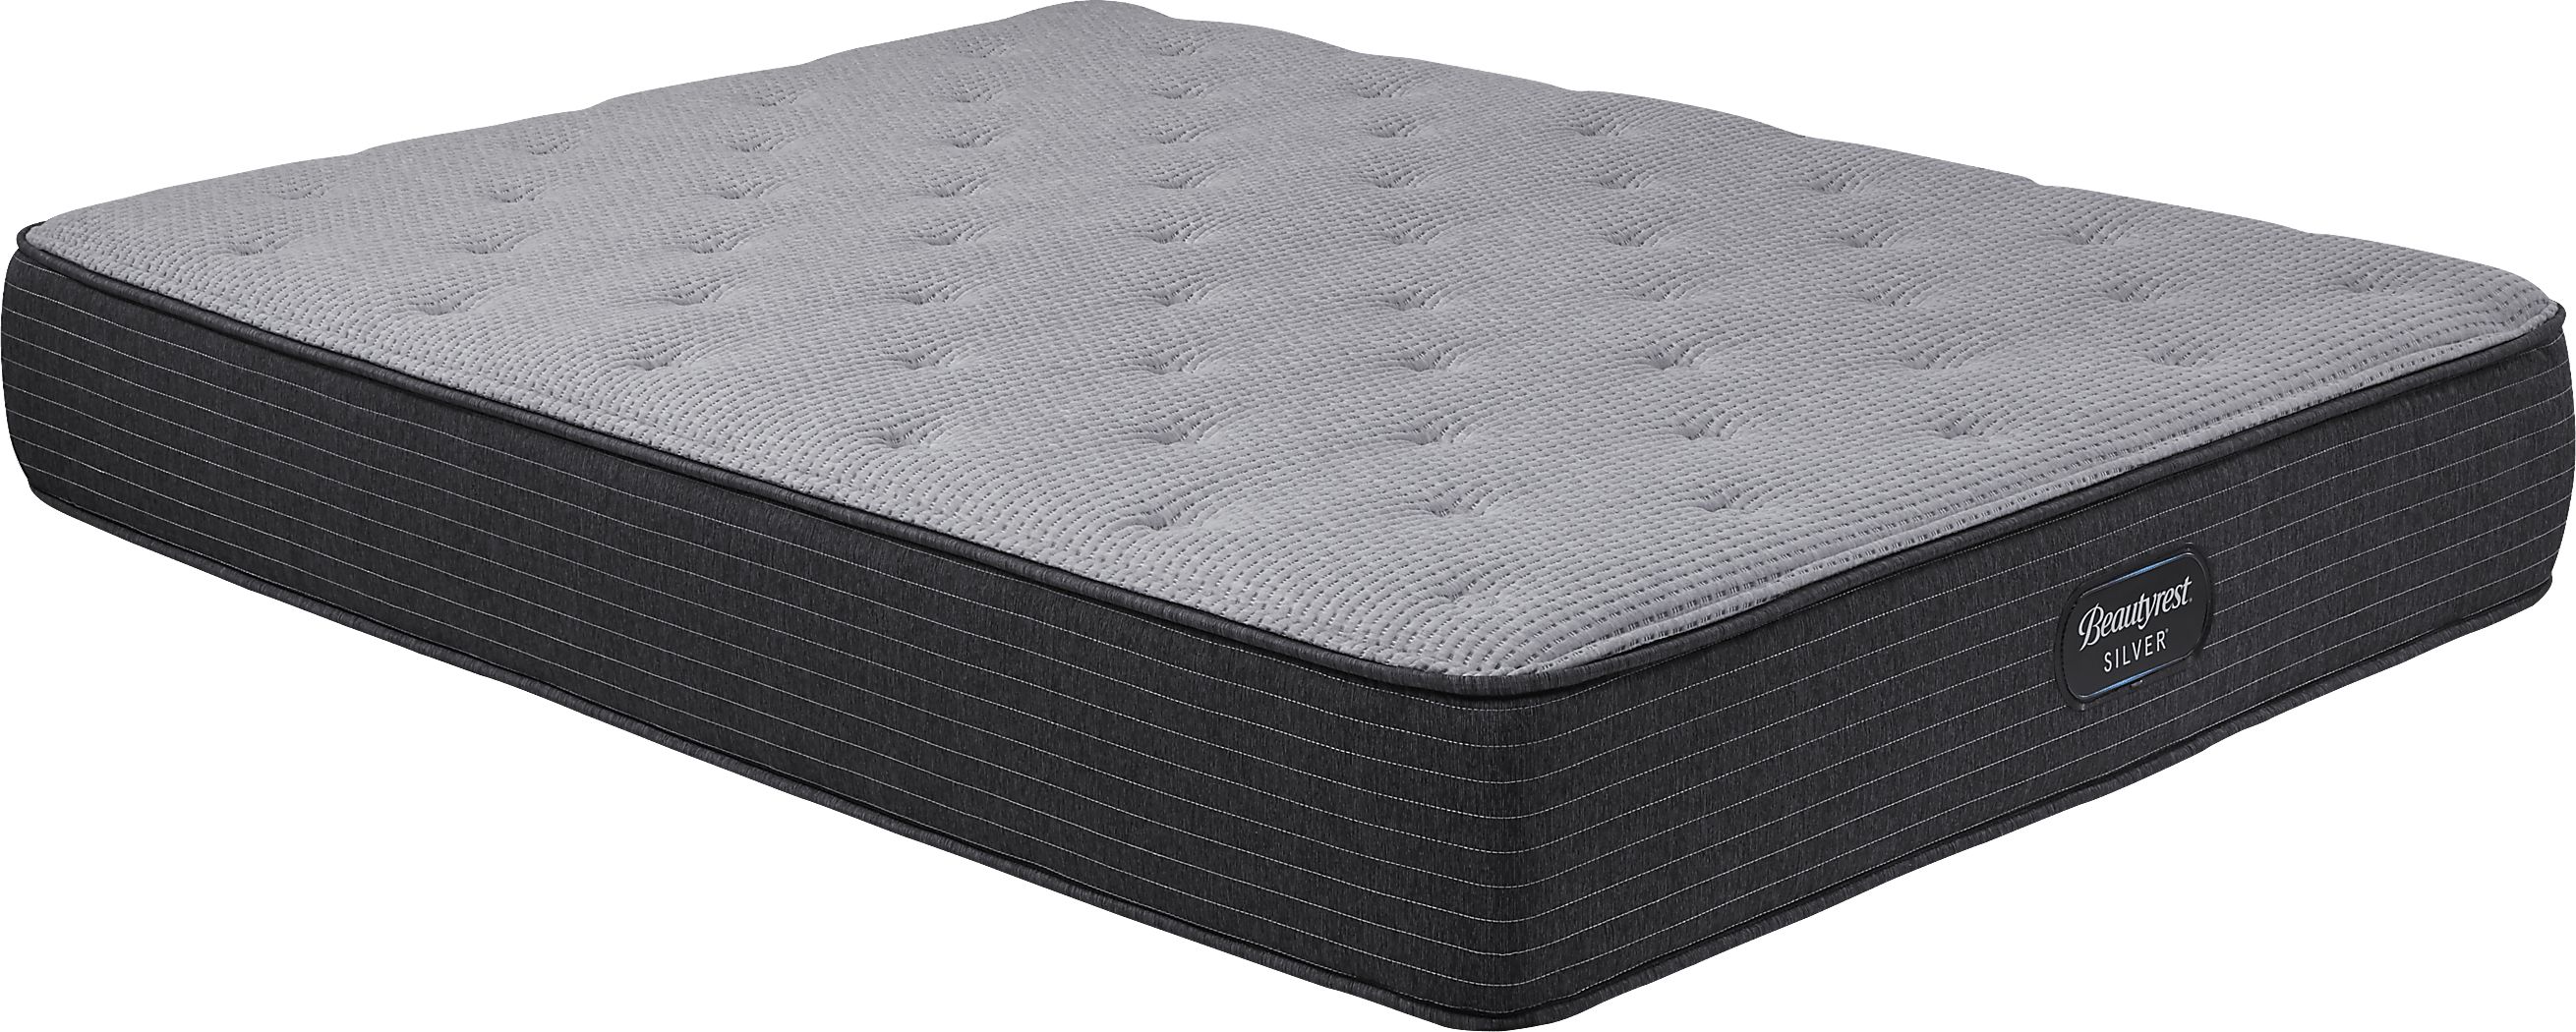 modaway aveline 10 in queen mattress in white